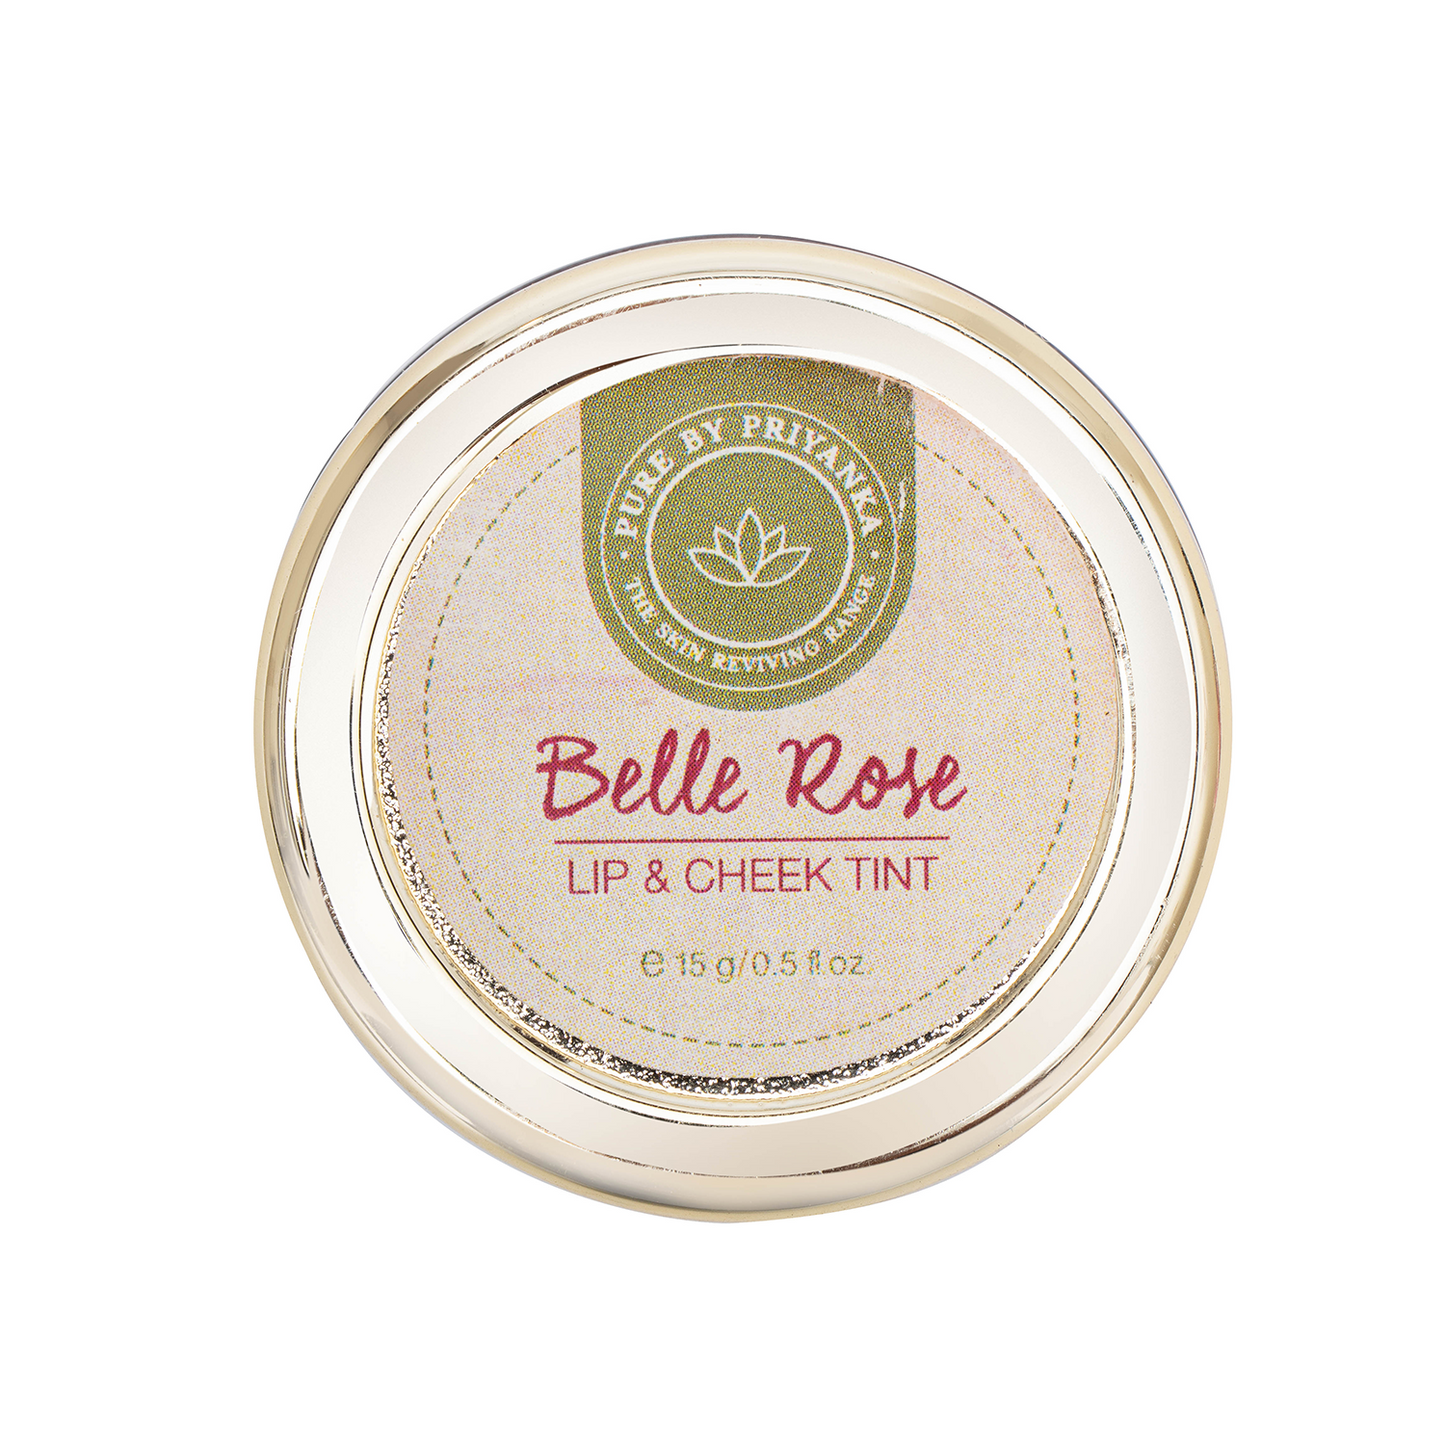 Belle rose Lip & Cheek Tint